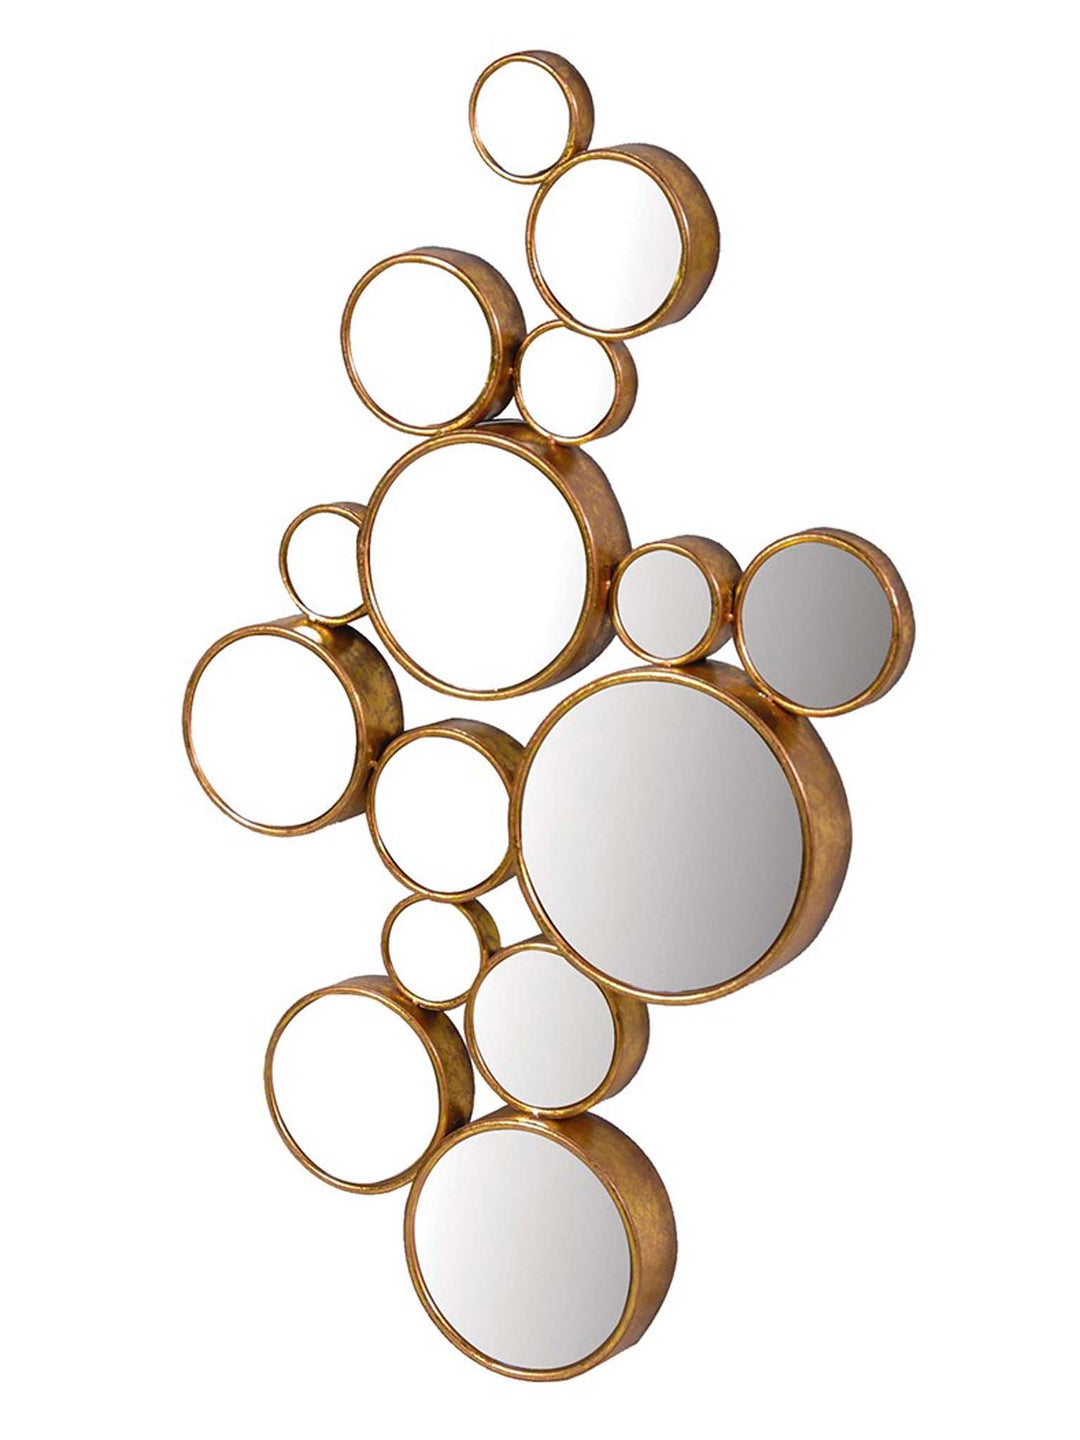 Gold mirror, fifteen circles wall mirror, Antique gold metal mirror